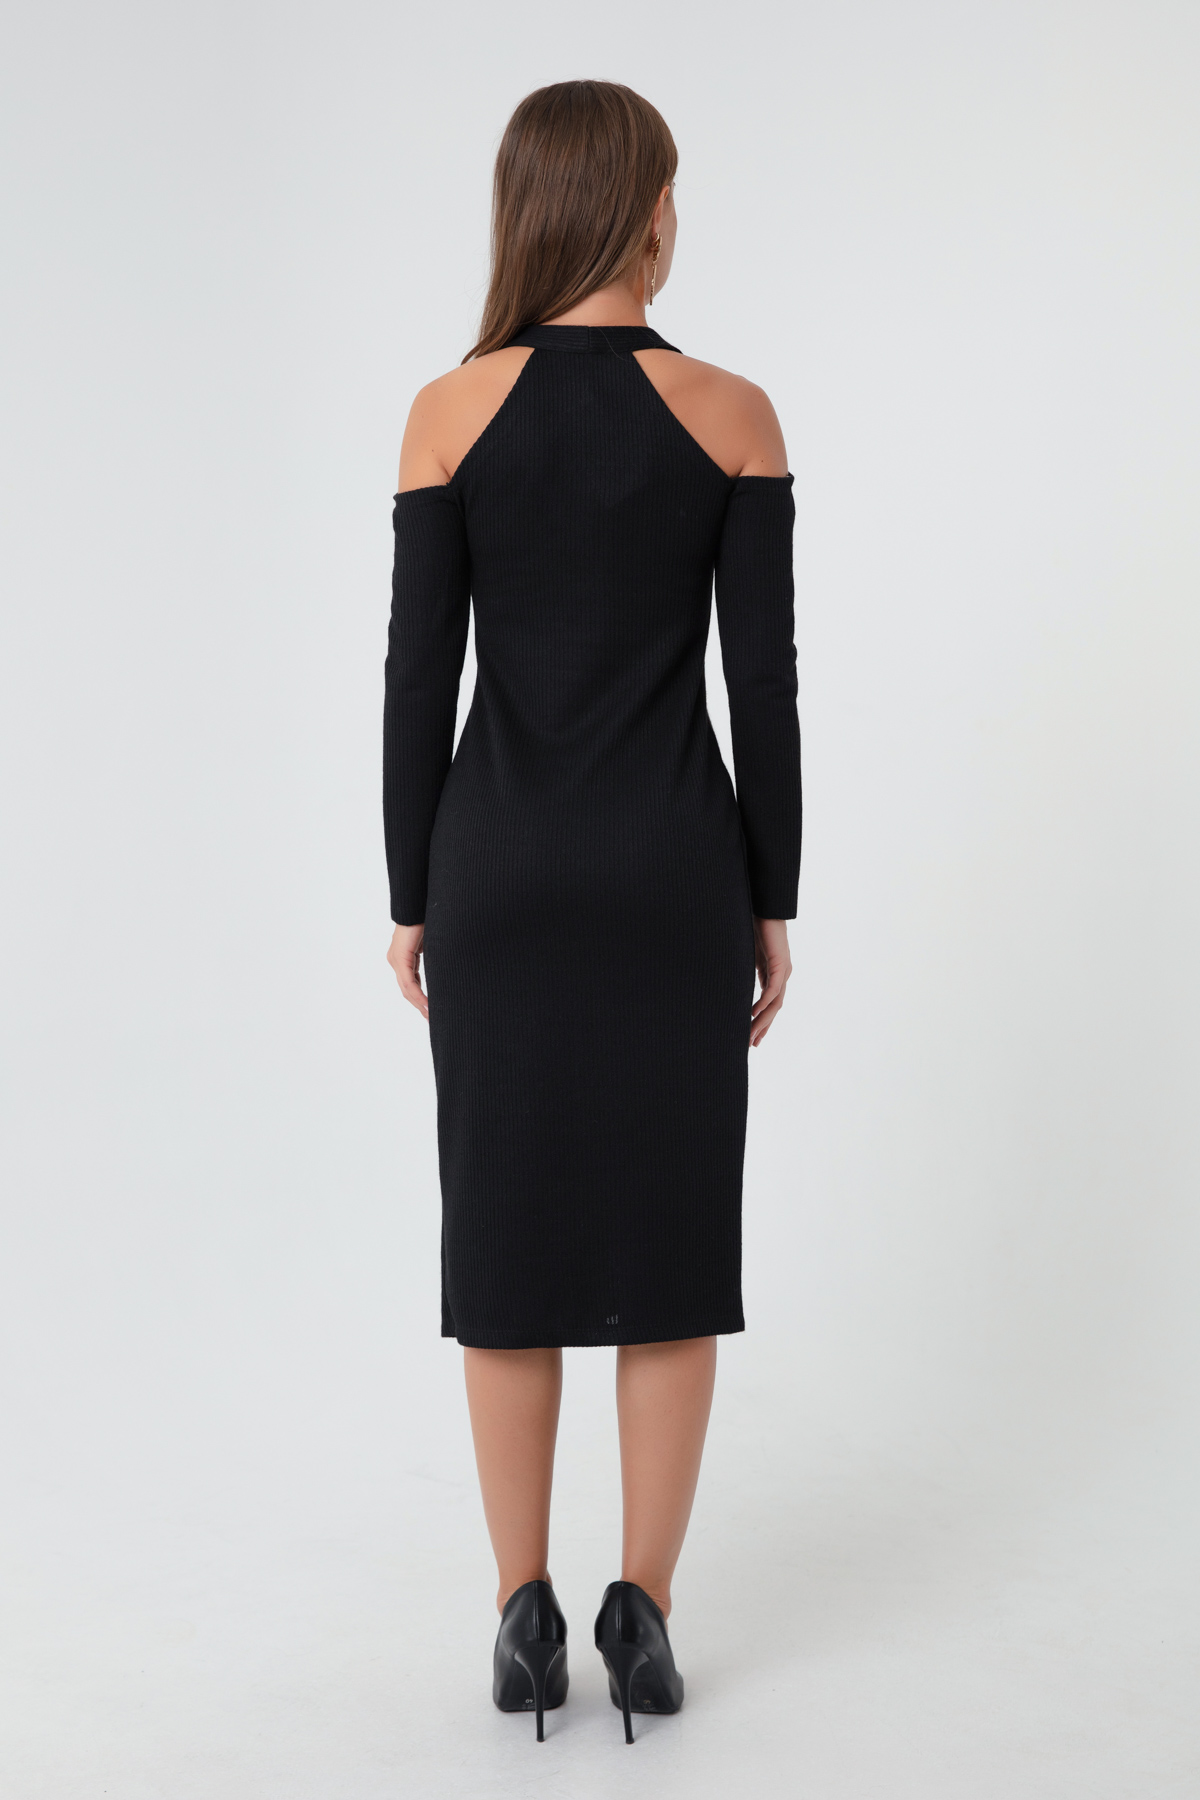 Women's Black Knitted Dress